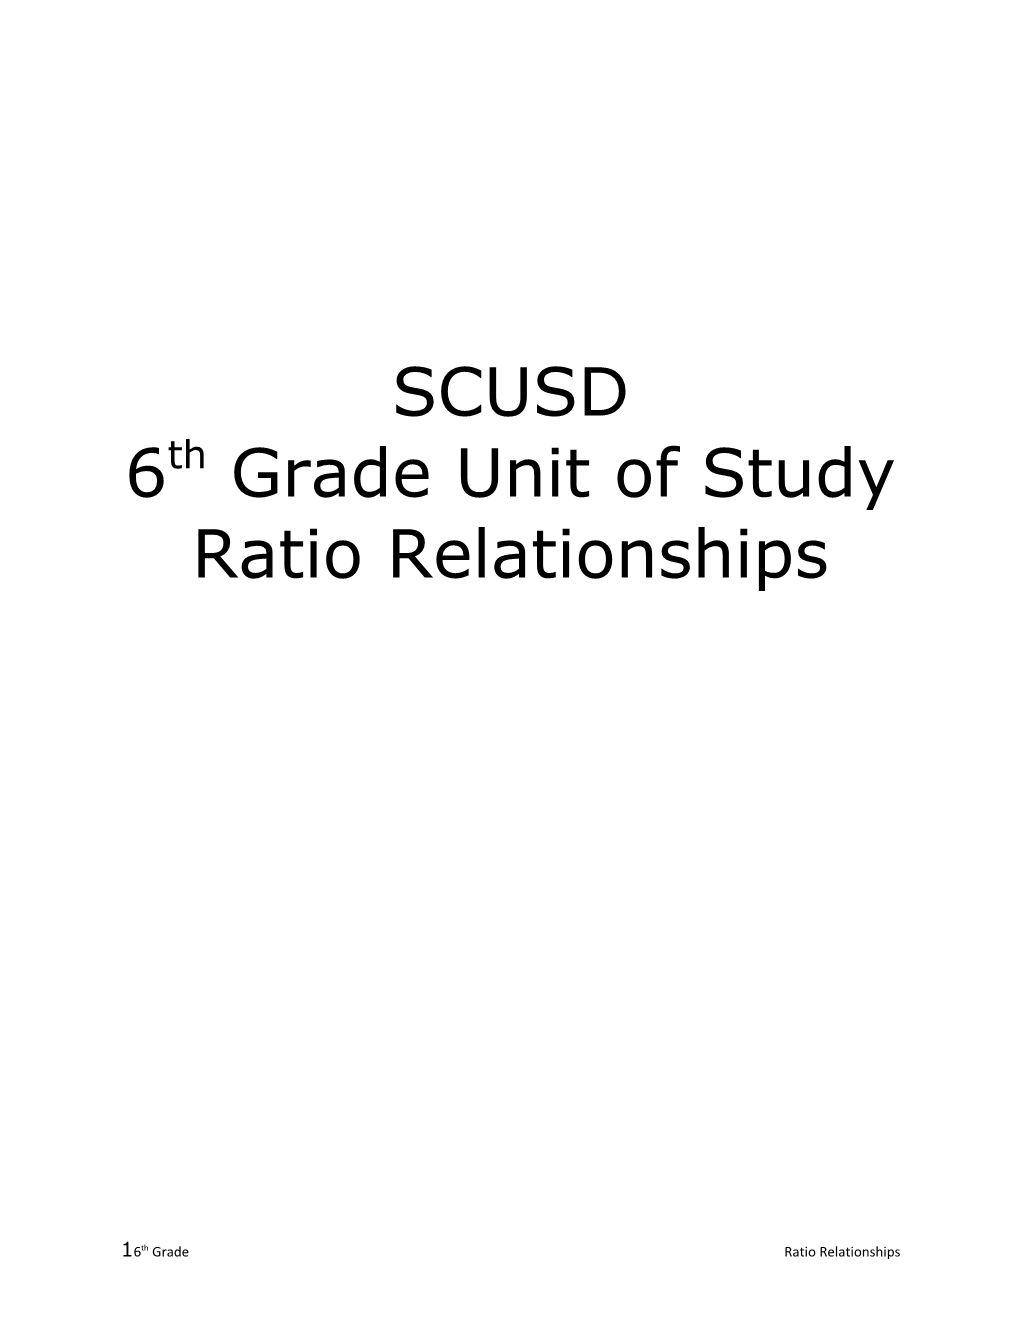 6Th Grade Unit of Study